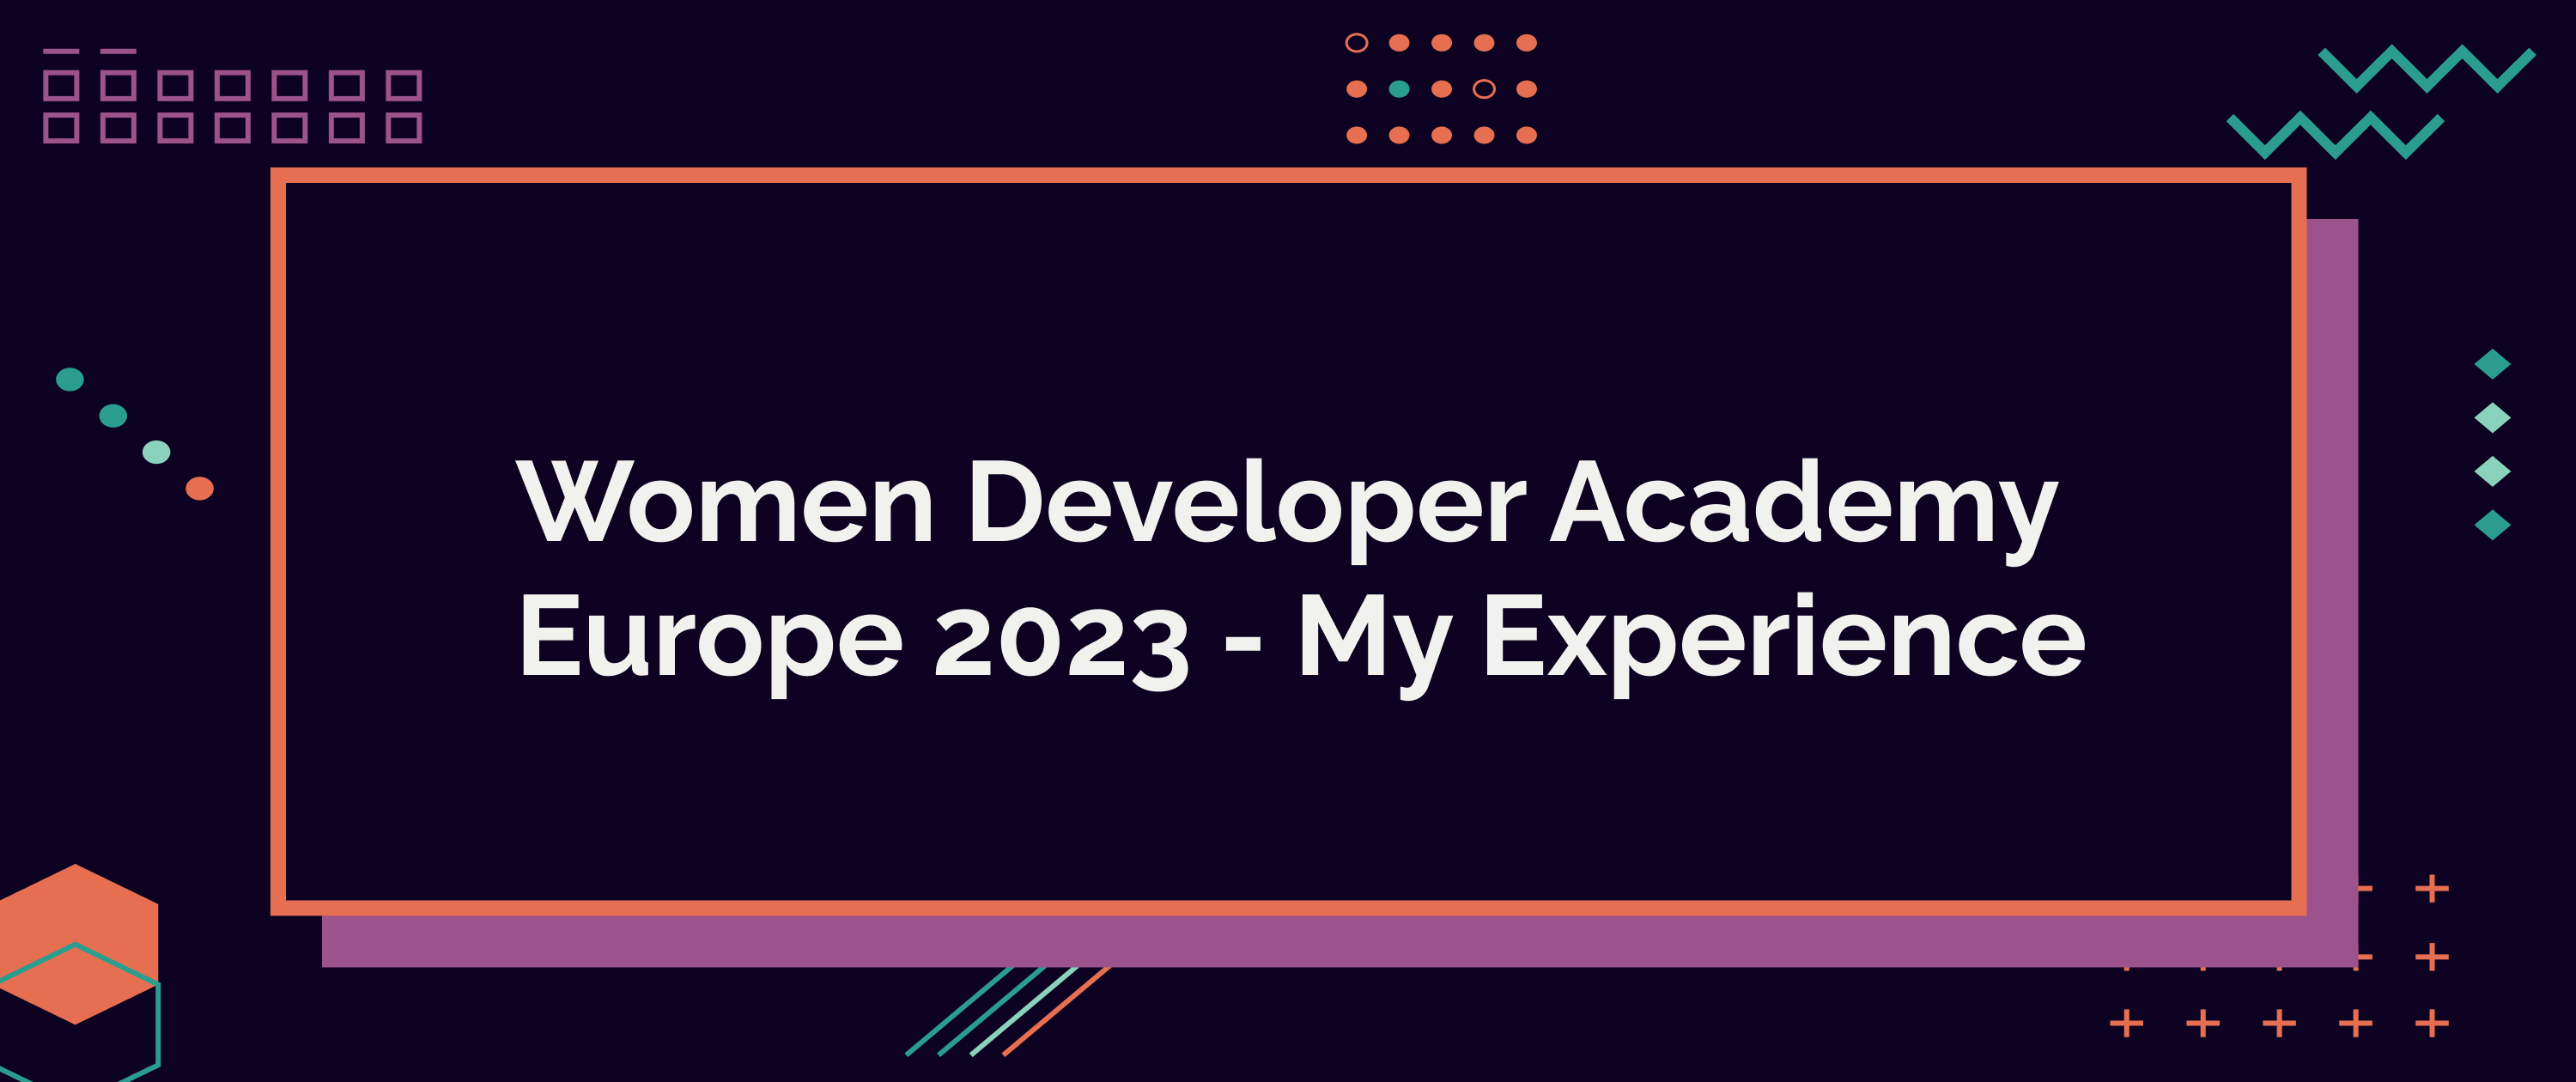 Women Developer Academy Europe 2023 - My Experience